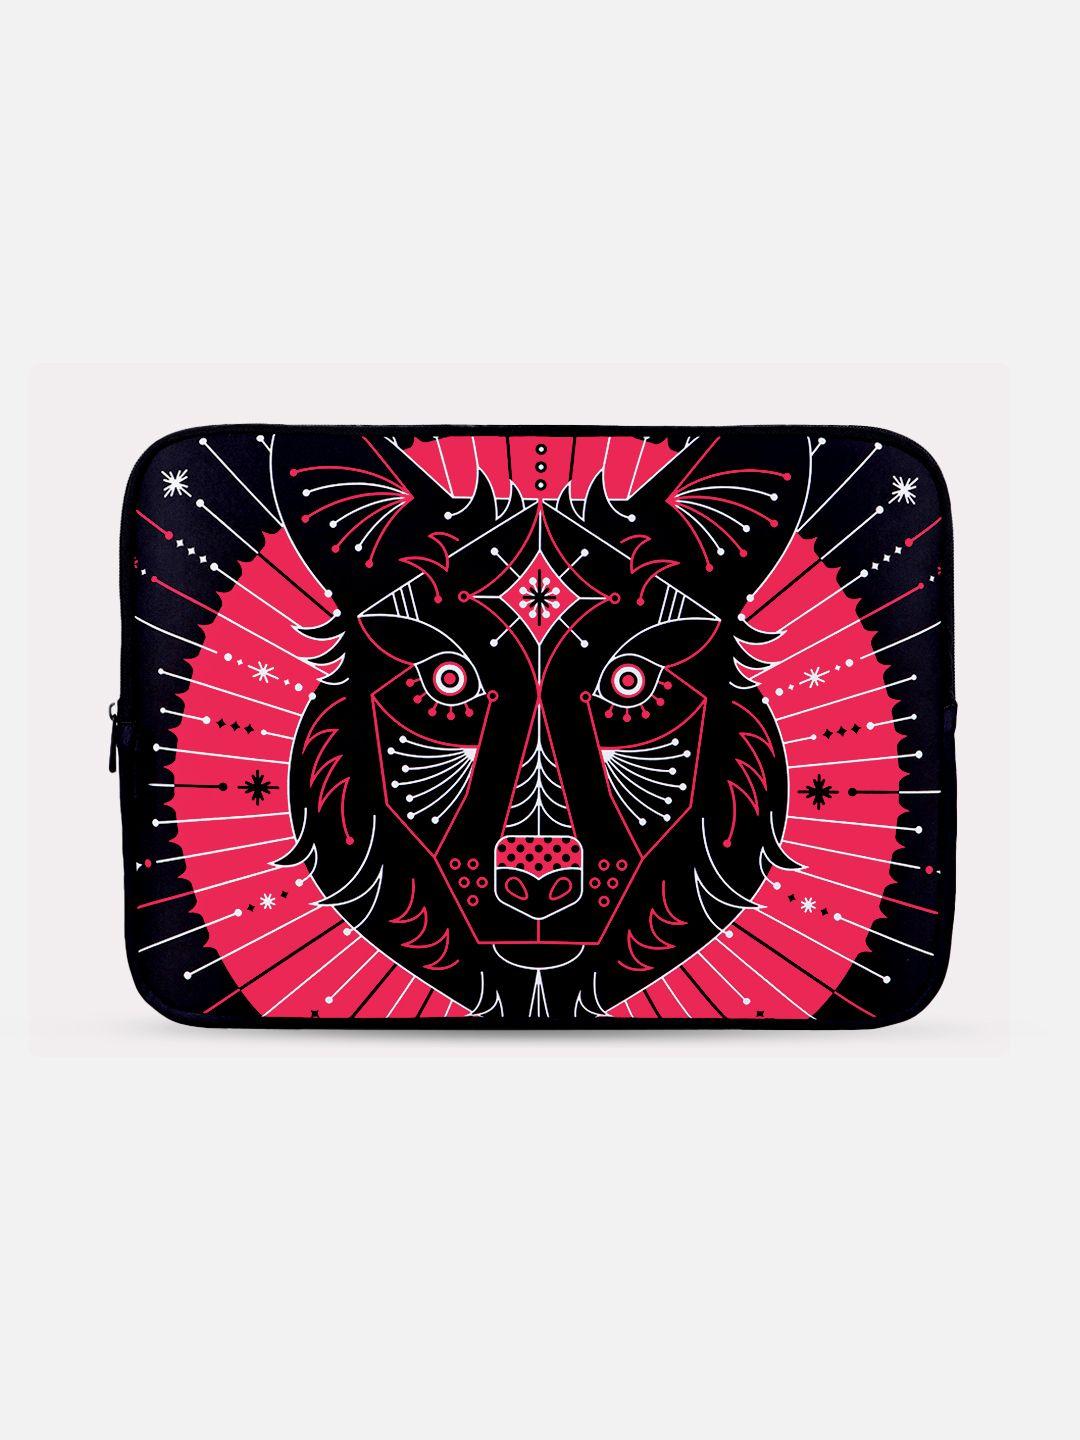 threadcurry unisex black & pink printed laptop sleeve